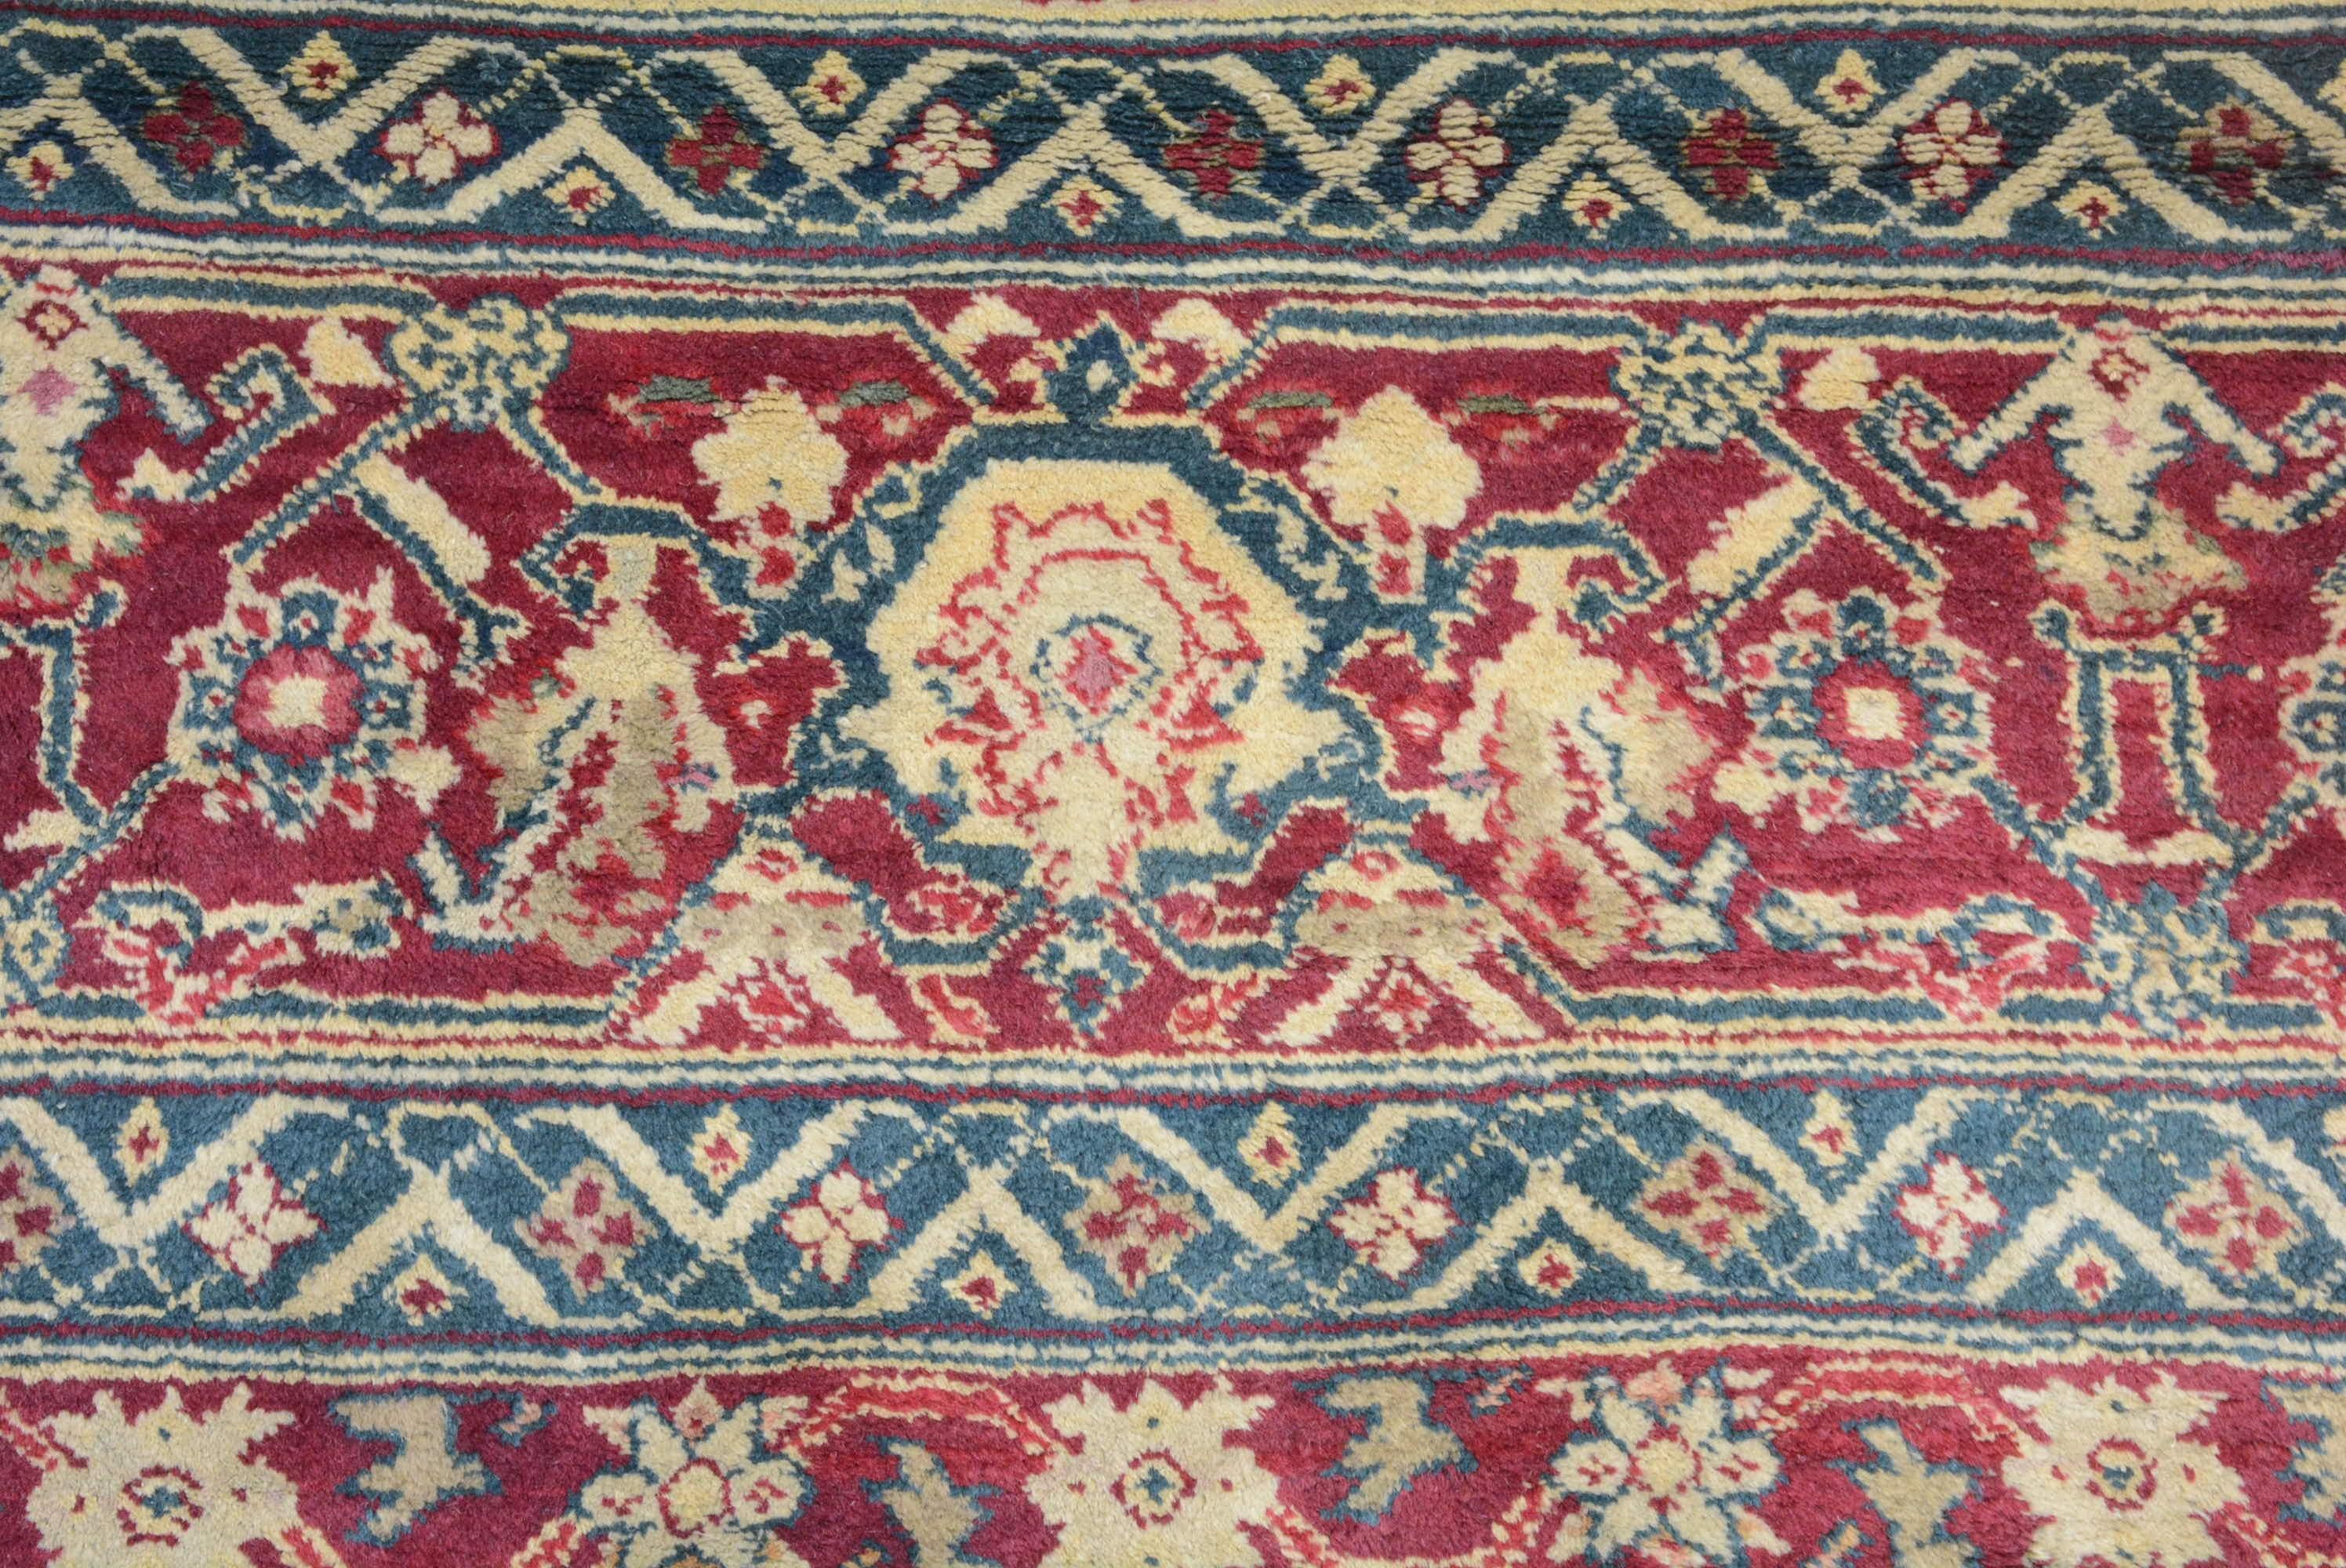 19th Century Antique Indian Agra Carpet For Sale